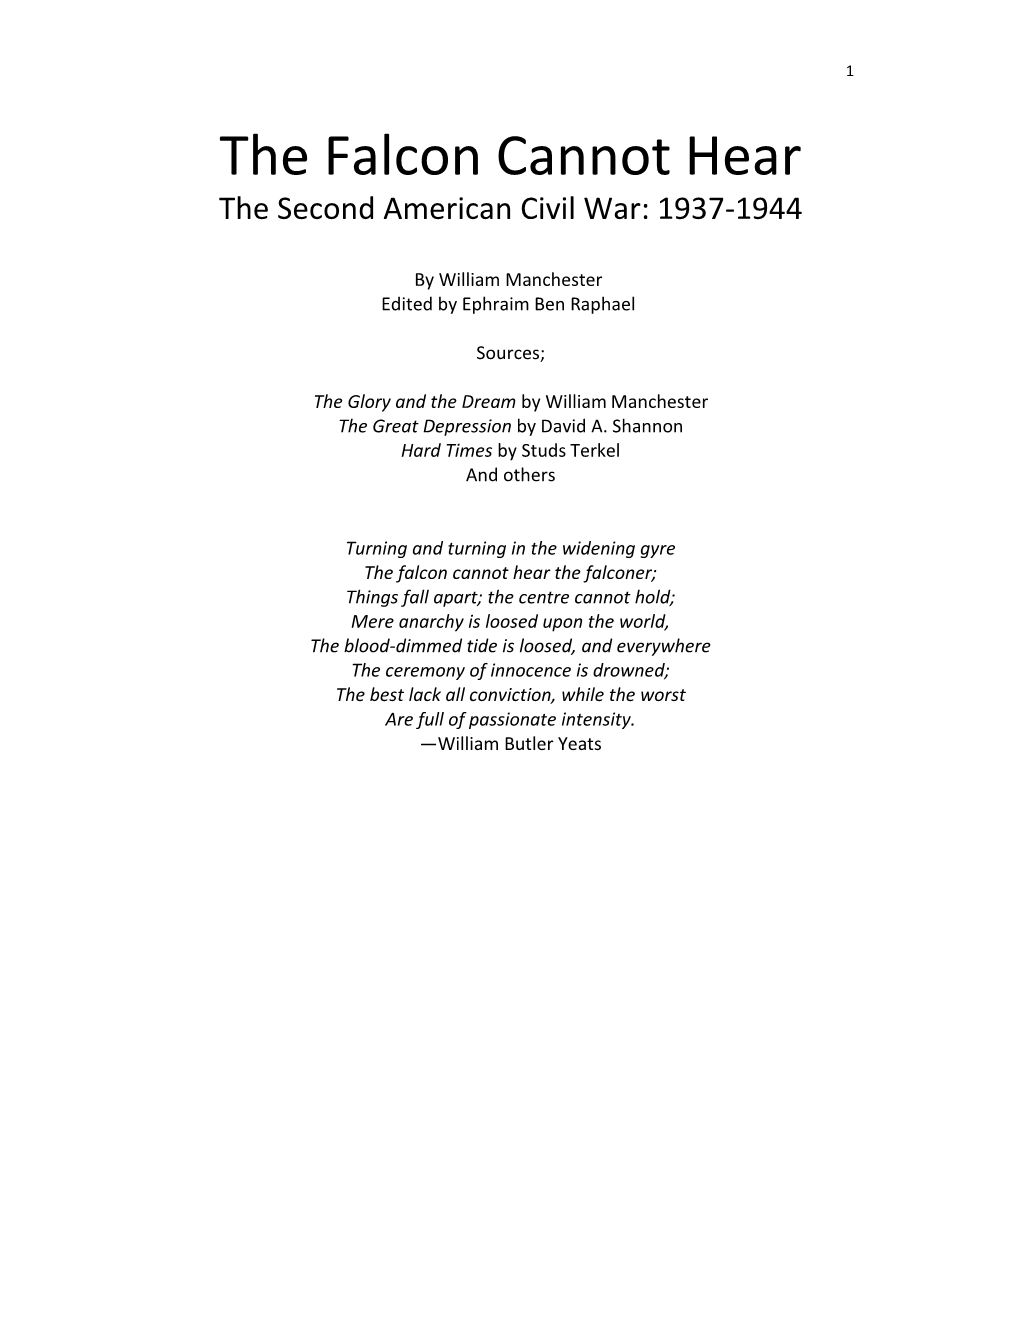 The Falcon Cannot Hear the Second American Civil War: 1937-1944